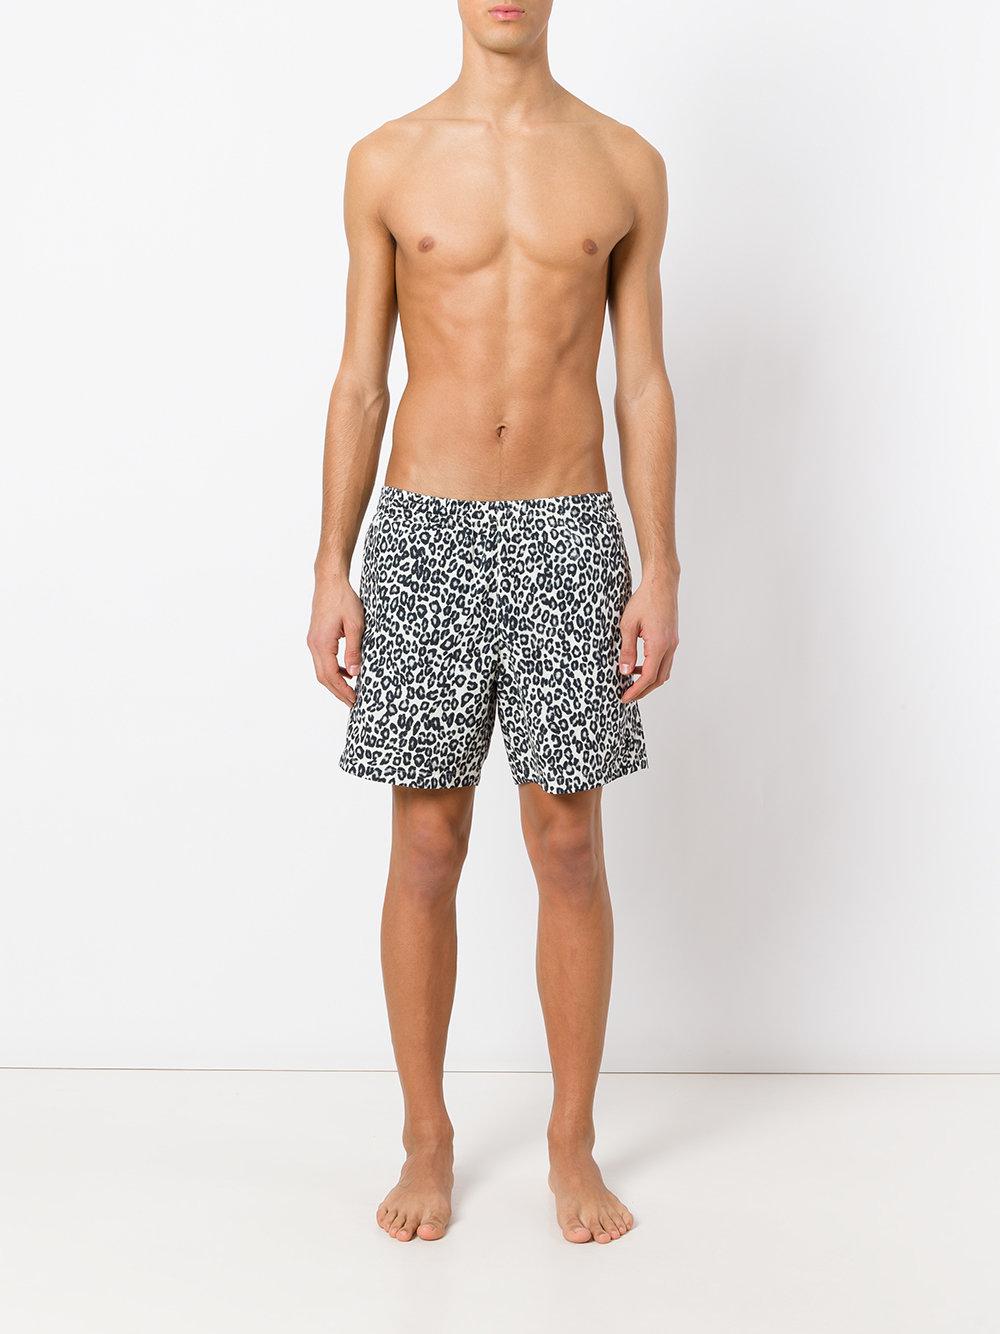 Alexander McQueen Leopard Print Swim Shorts in Black for Men - Lyst